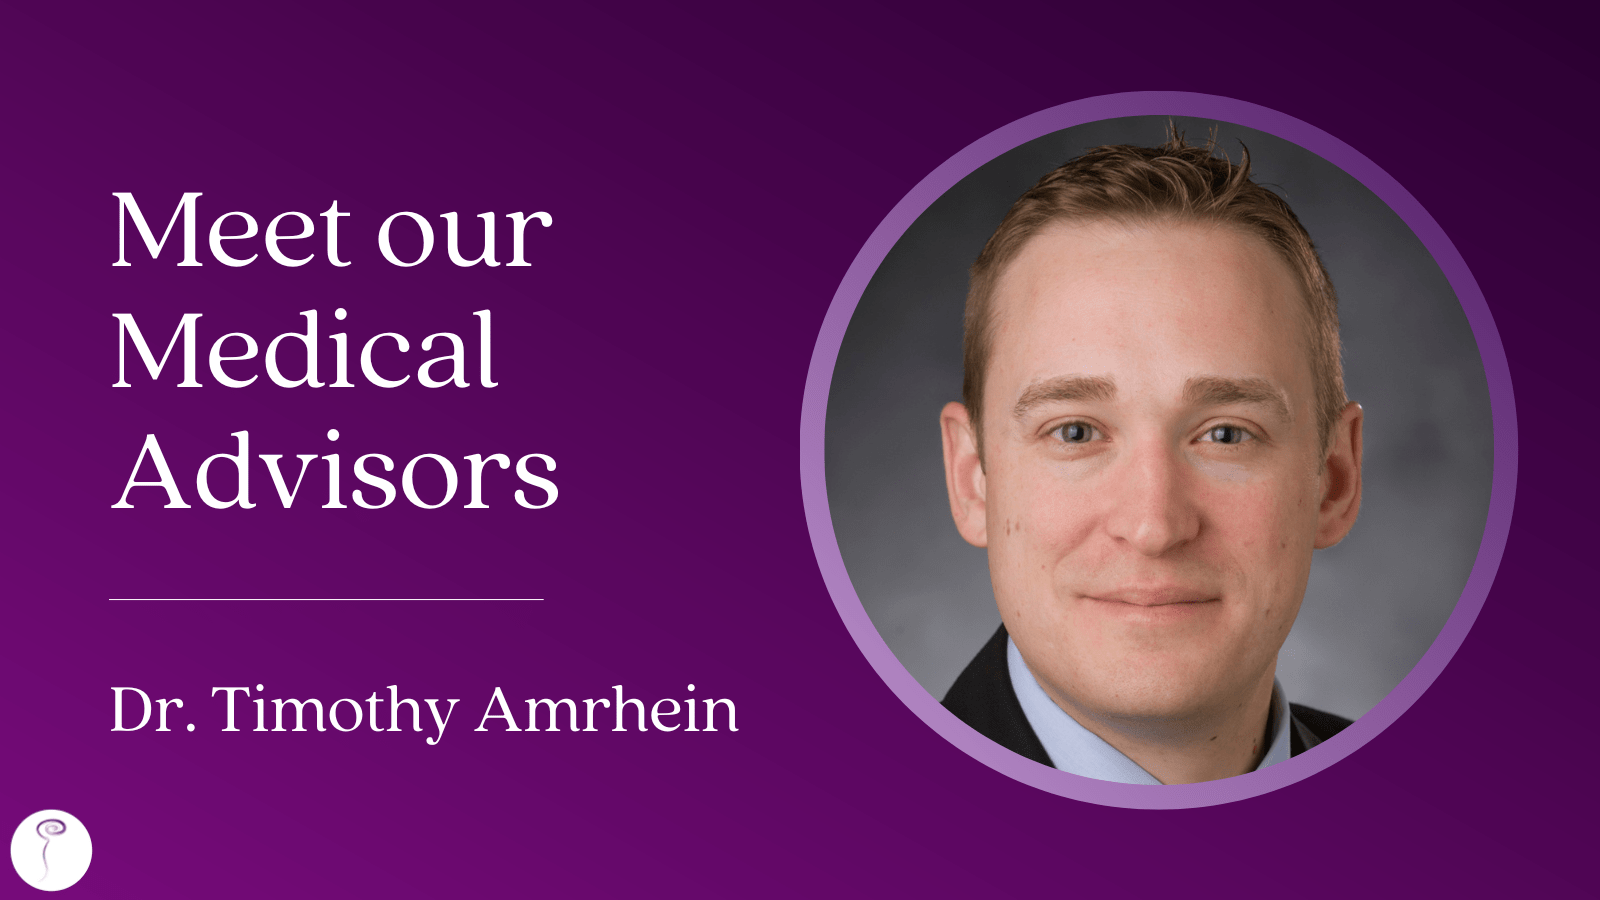 Meet our Medical Advisors: Dr. Timothy Amrhein